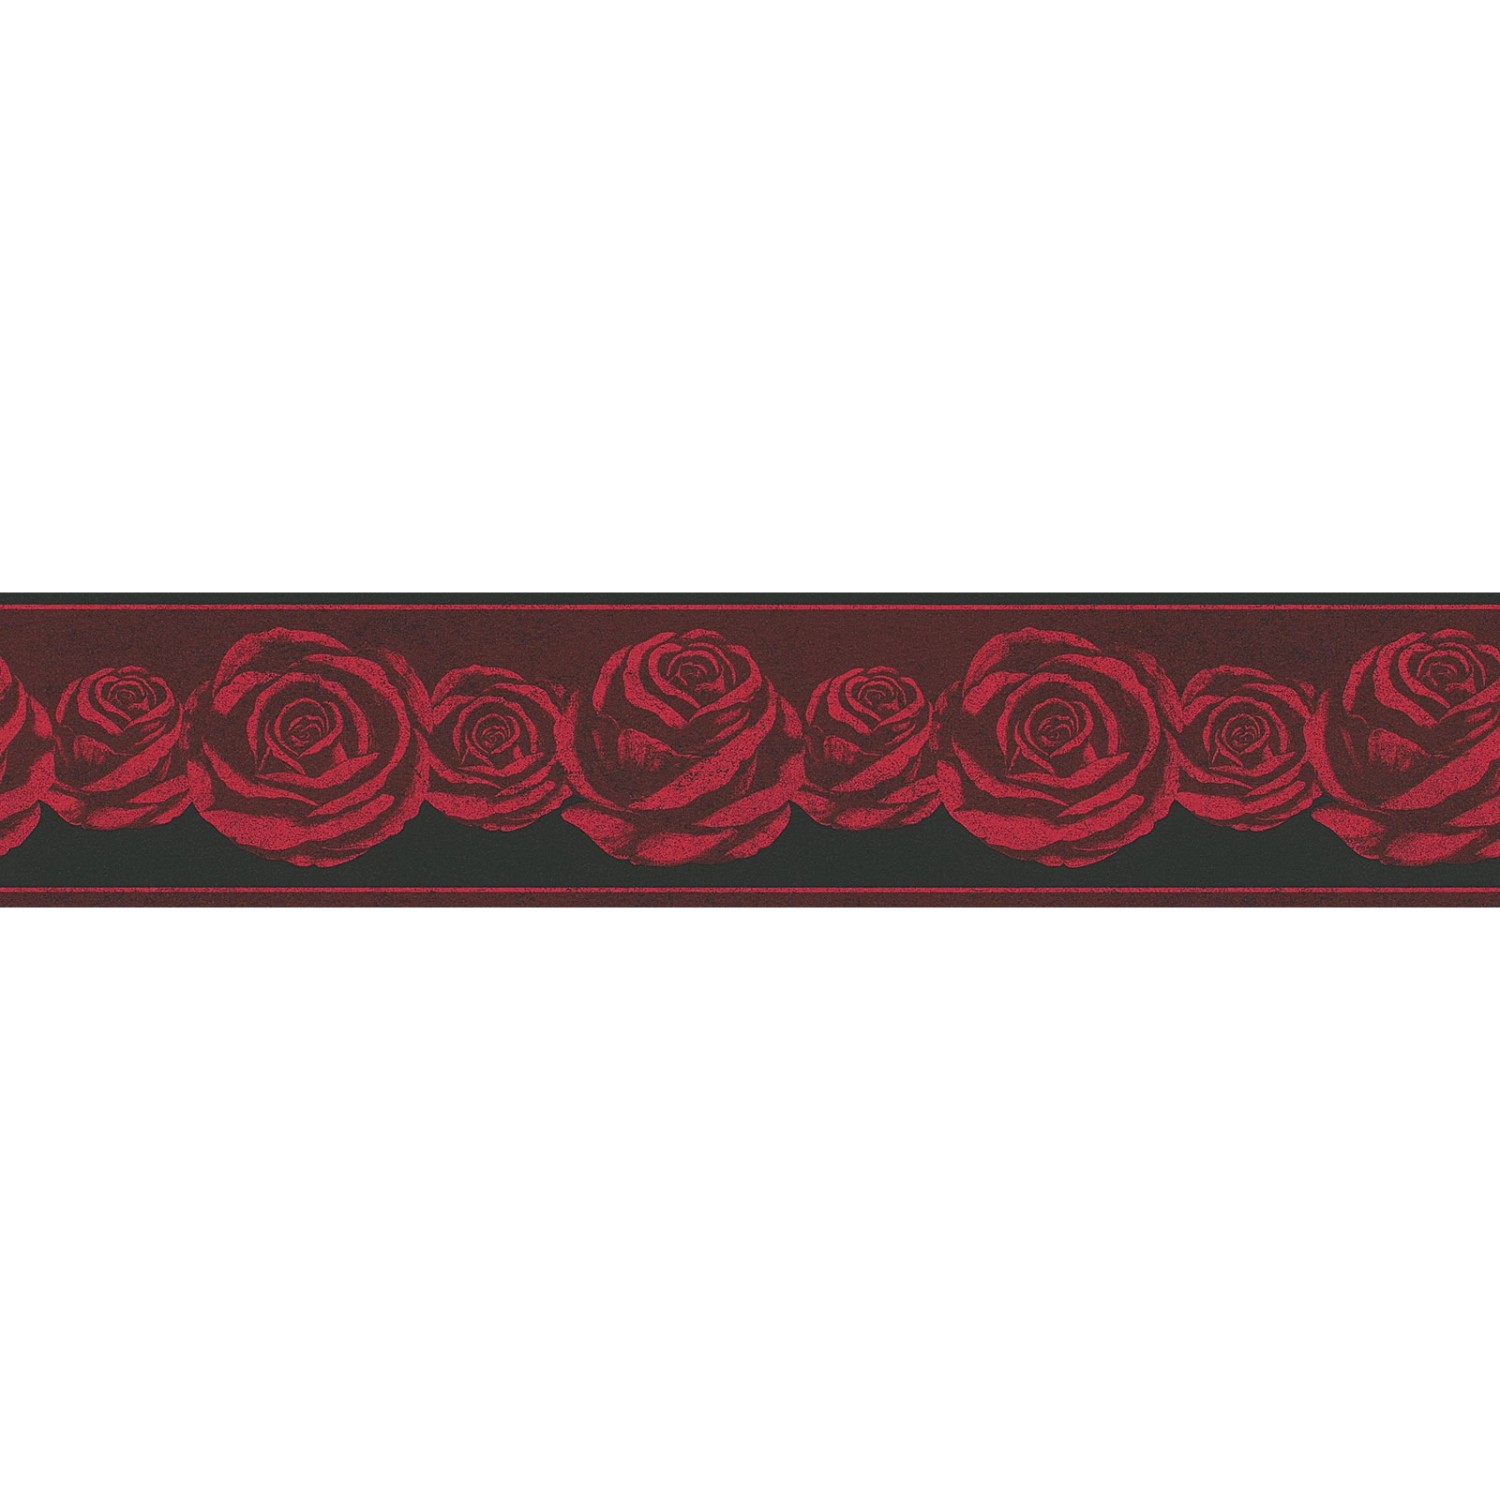 Bricoflor Tapeten Bordüre mit Rosen für Schlafzimmer Romantische Tapetenbordüre mit Rosenmuster aus Papier Florale Tapet